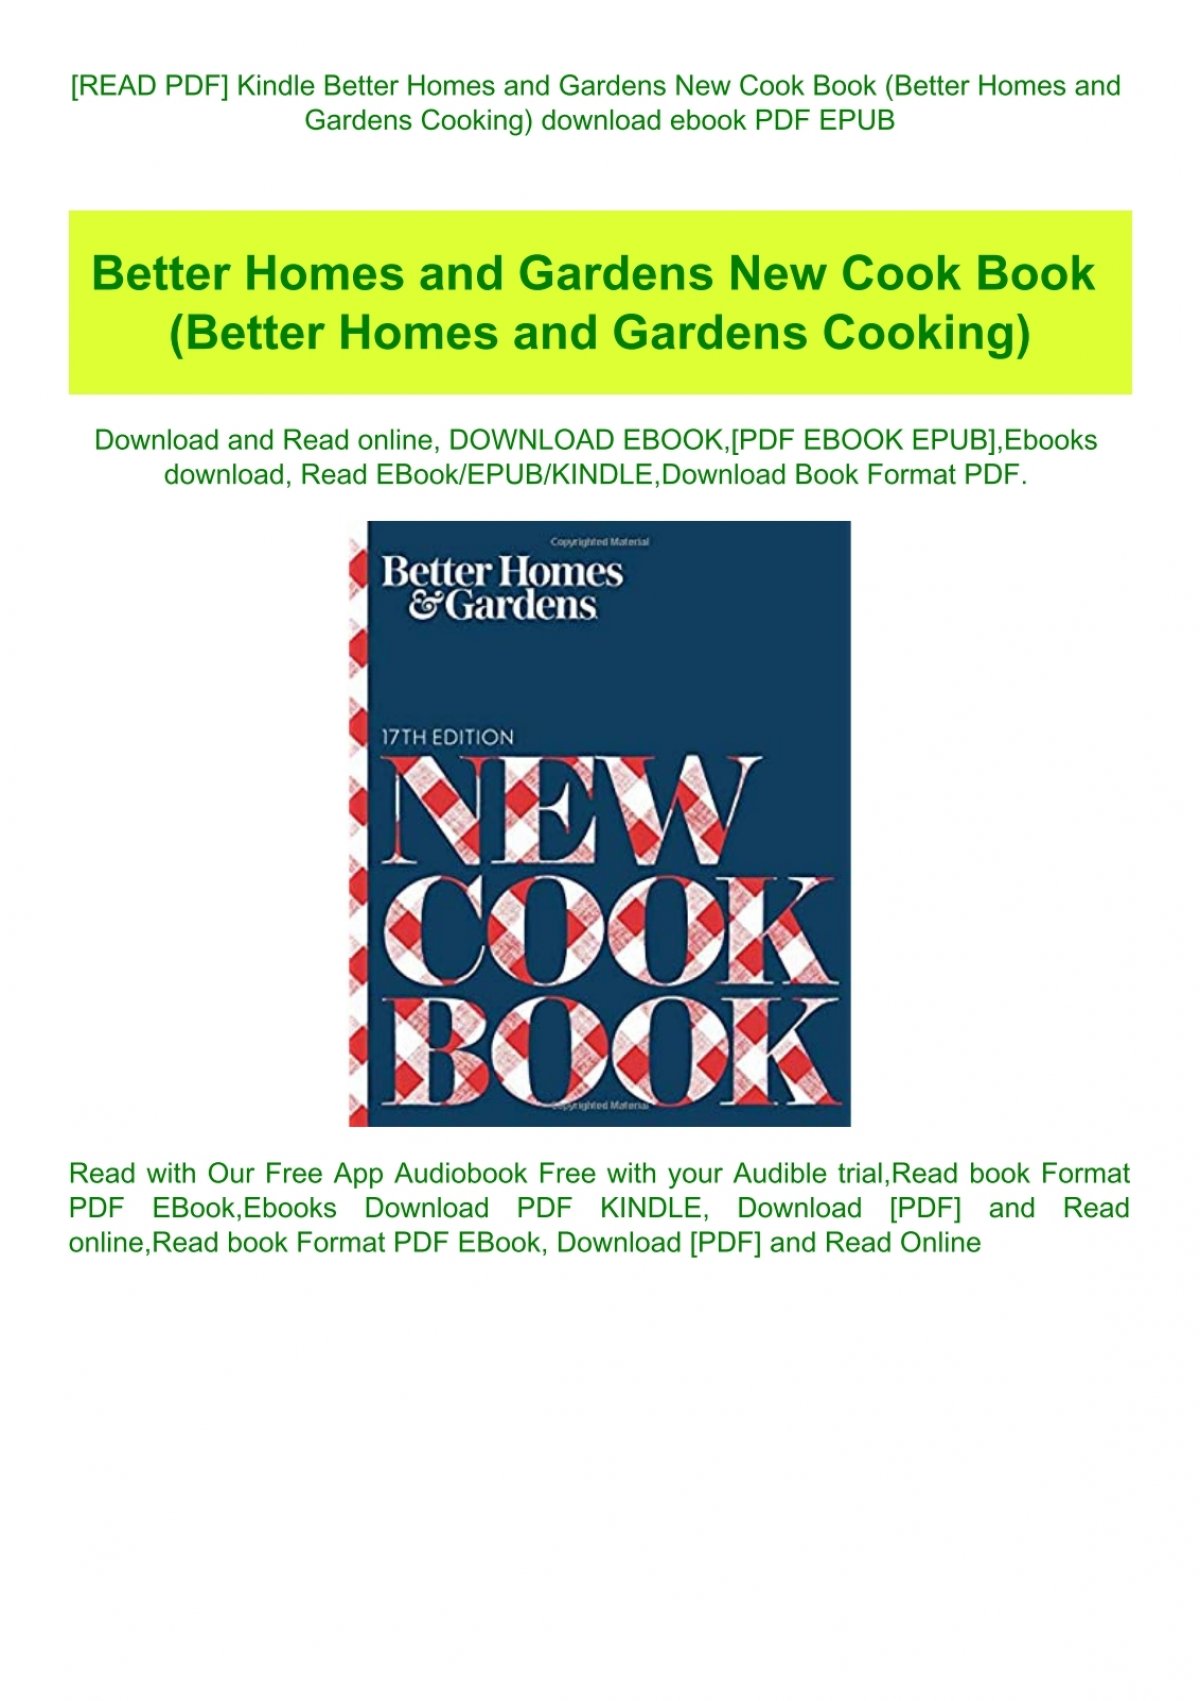 Read Pdf Kindle Better Homes And Gardens New Cook Book Better Homes And Gardens Cooking Download Ebook Pdf Epub<script async src=